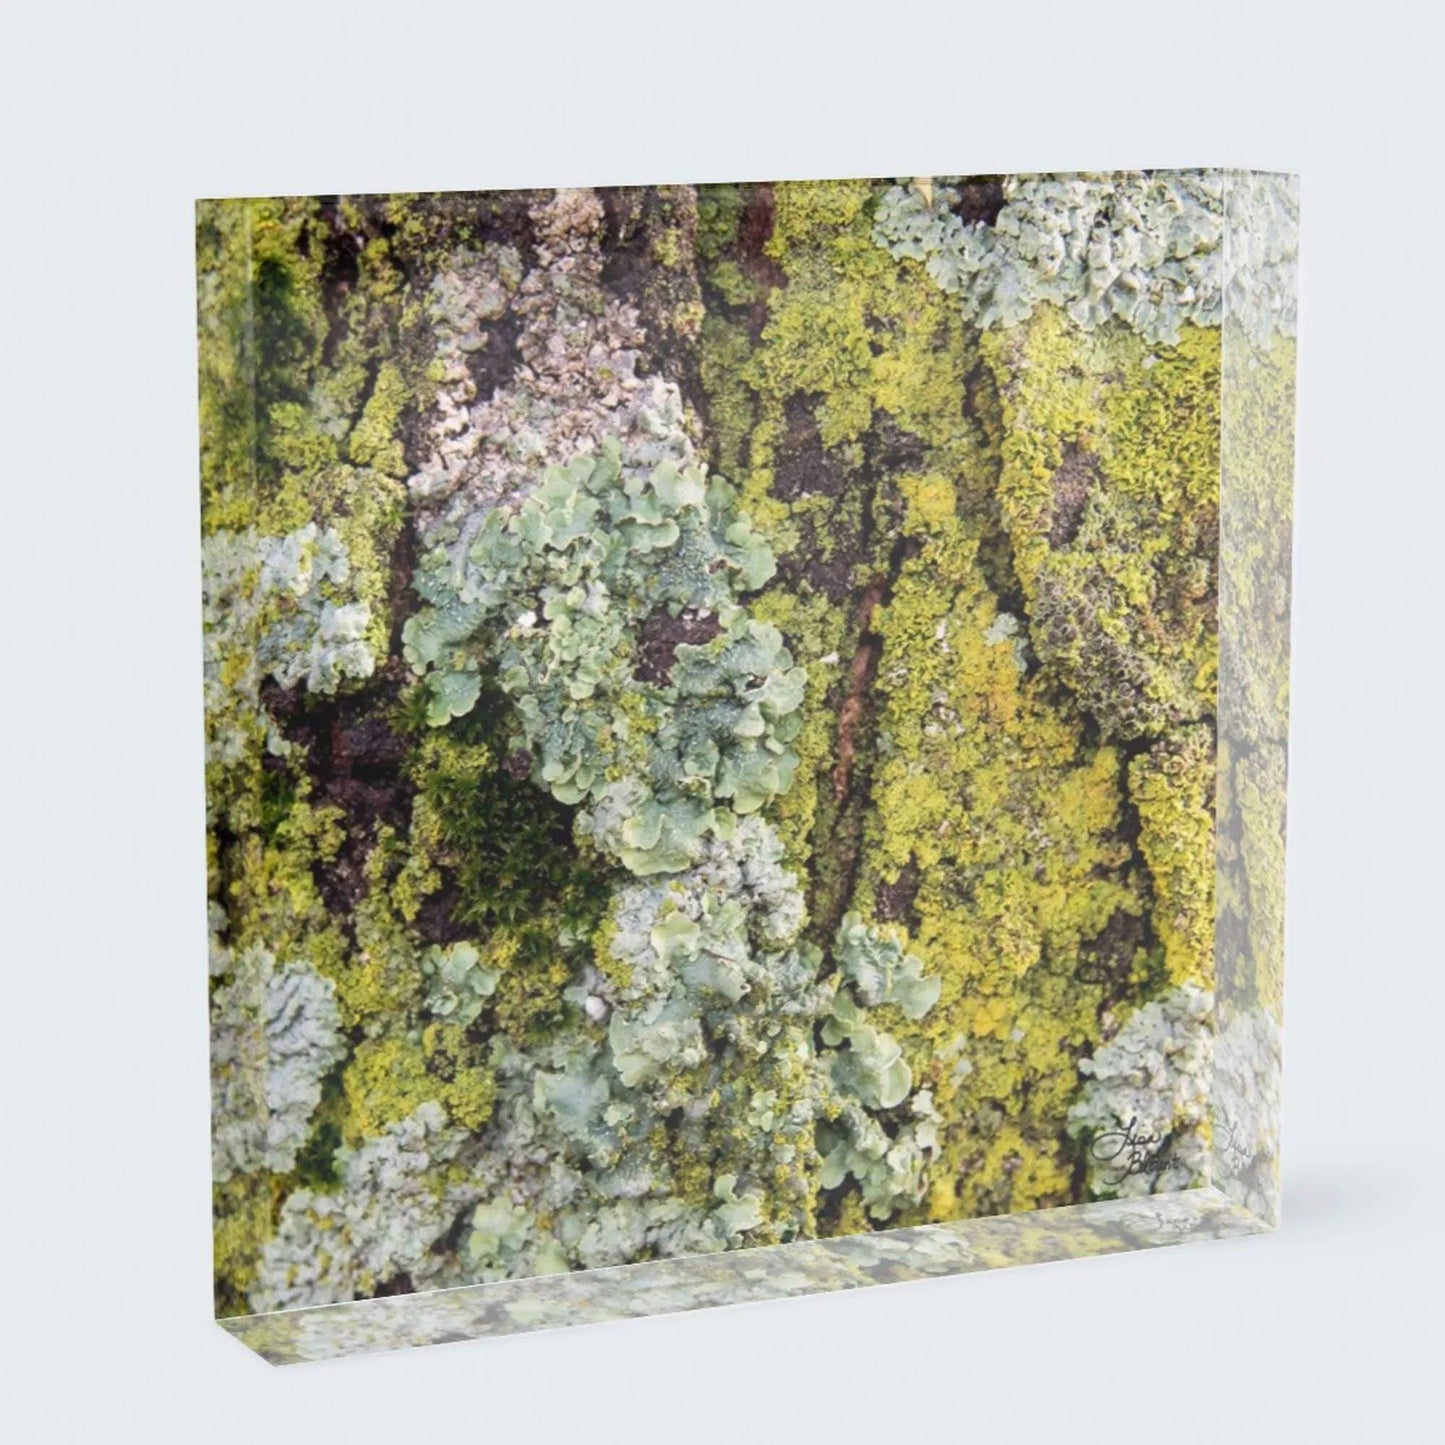 Acrylic block art of green moss lichen on tree bark